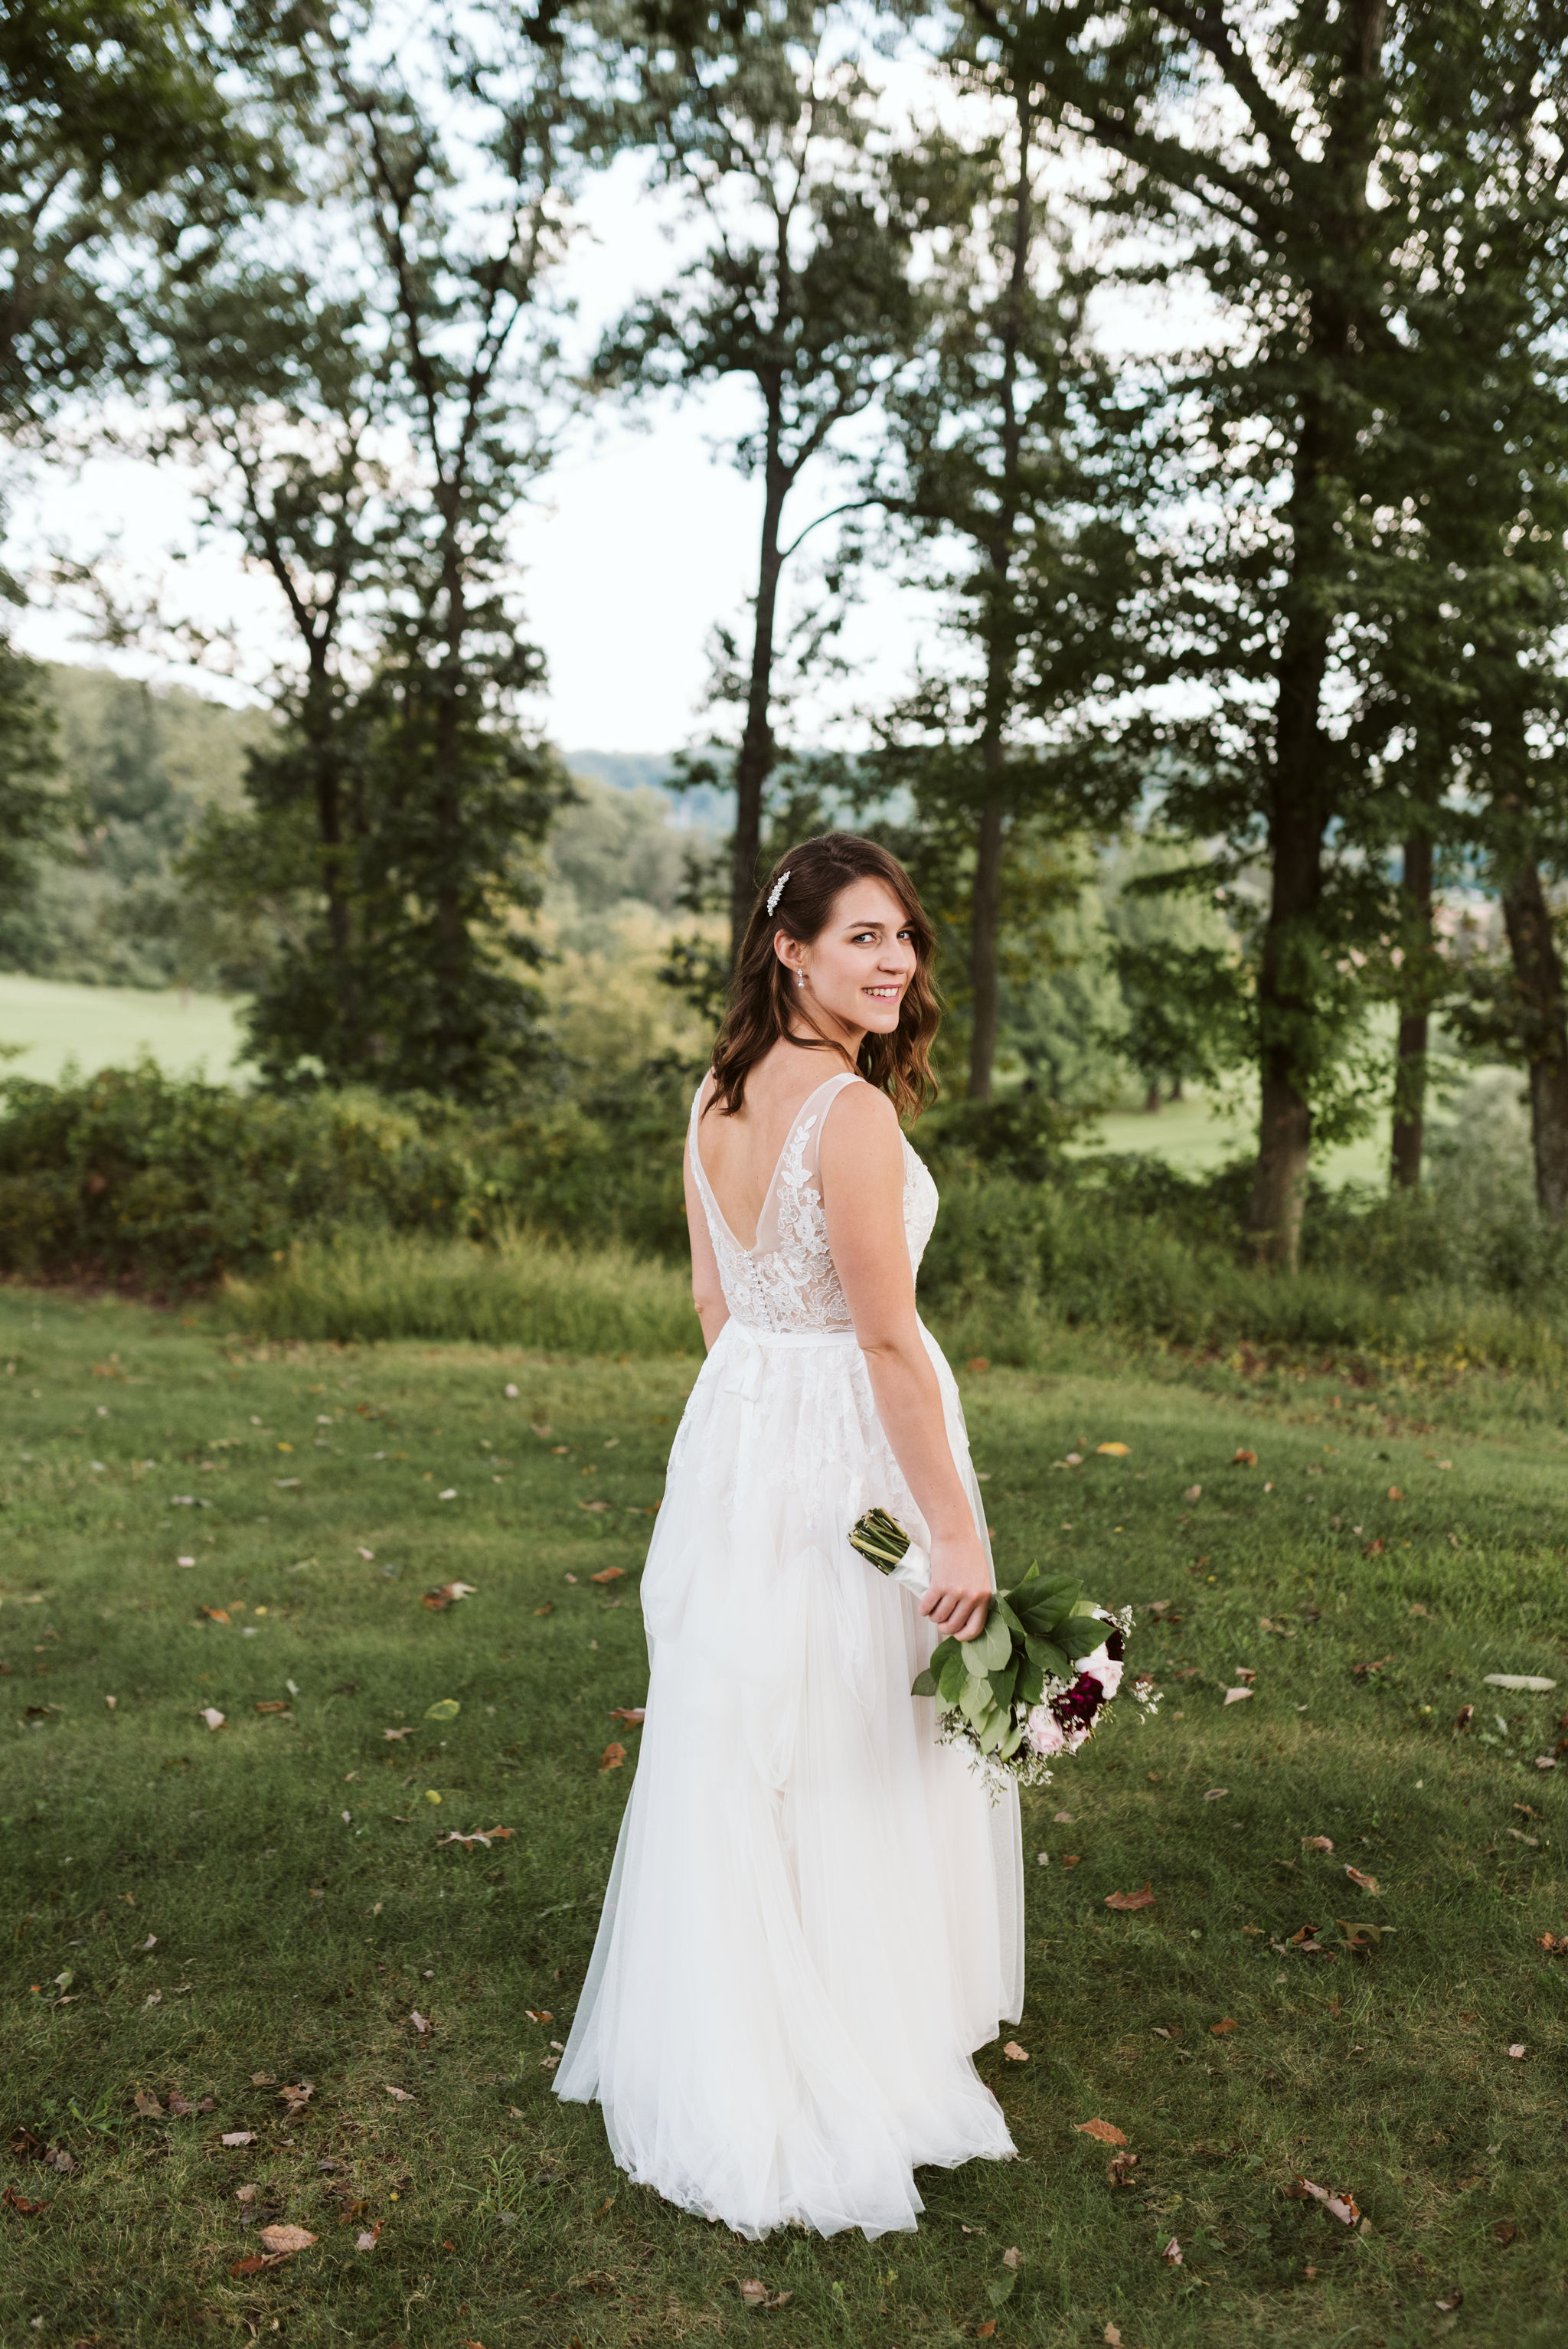  Phoenix Maryland, Baltimore Wedding Photographer, Eagle’s Nest Country Club, Classic, Romantic, Spring, Portrait Photo of the Bride, Gaby Vinas, BHLDN Dress, Dundalk Florist 